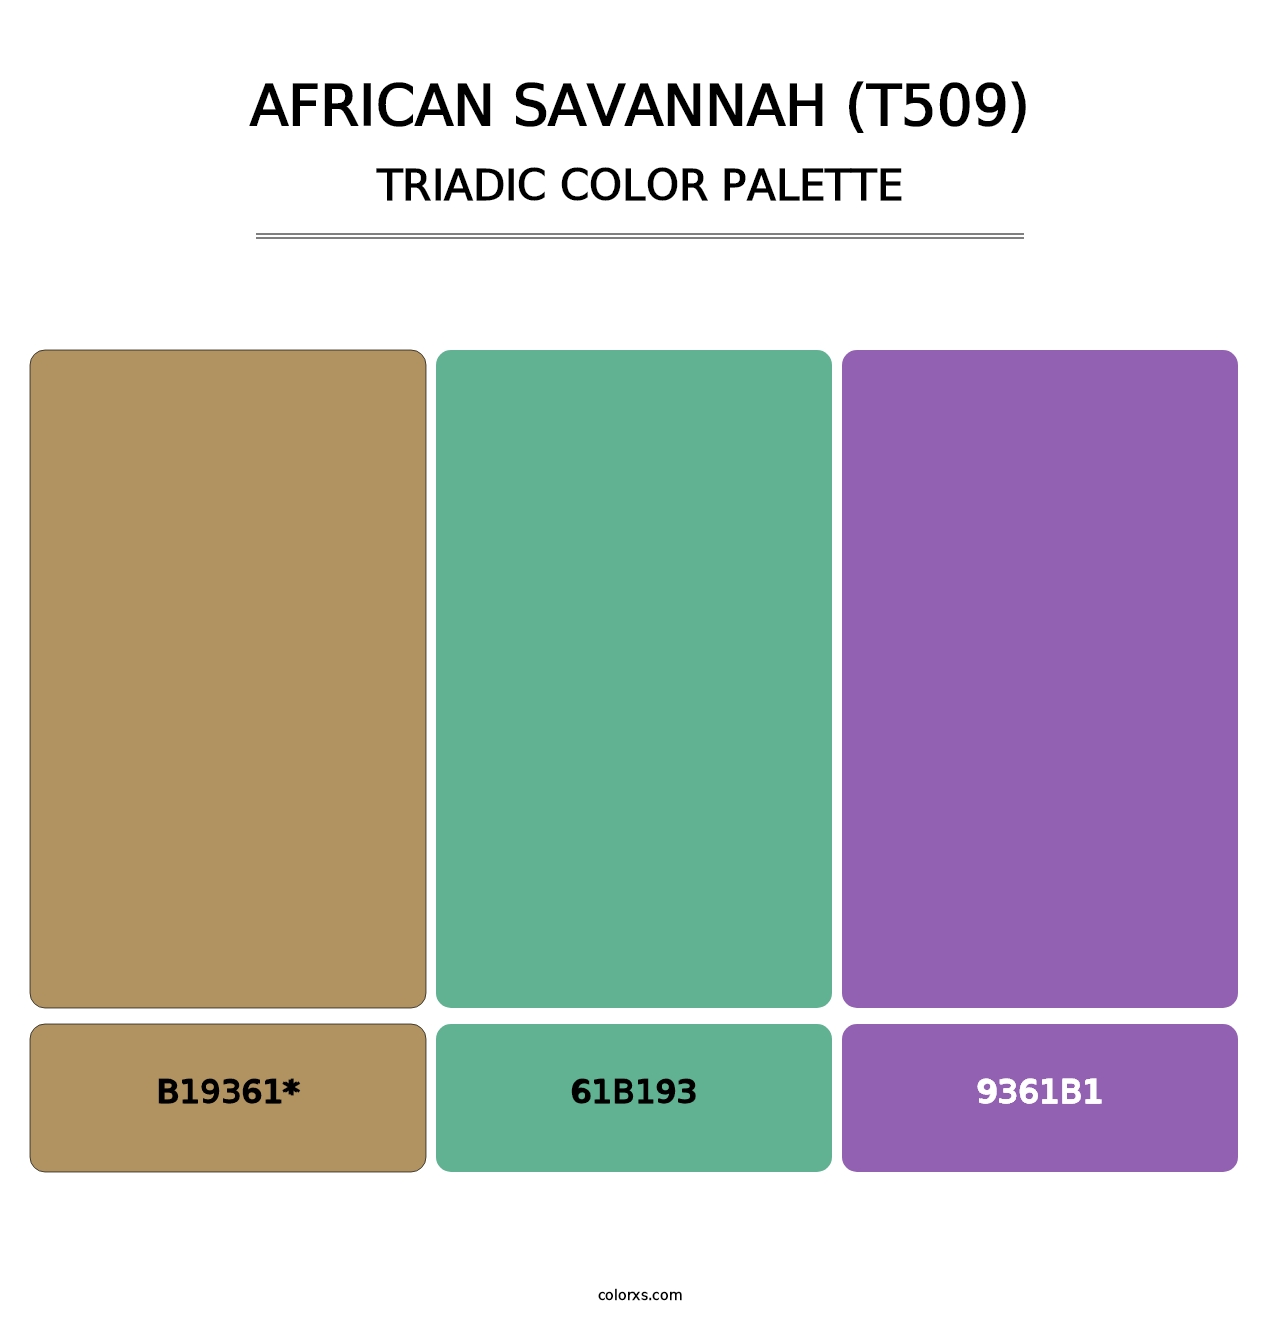 African Savannah (T509) - Triadic Color Palette